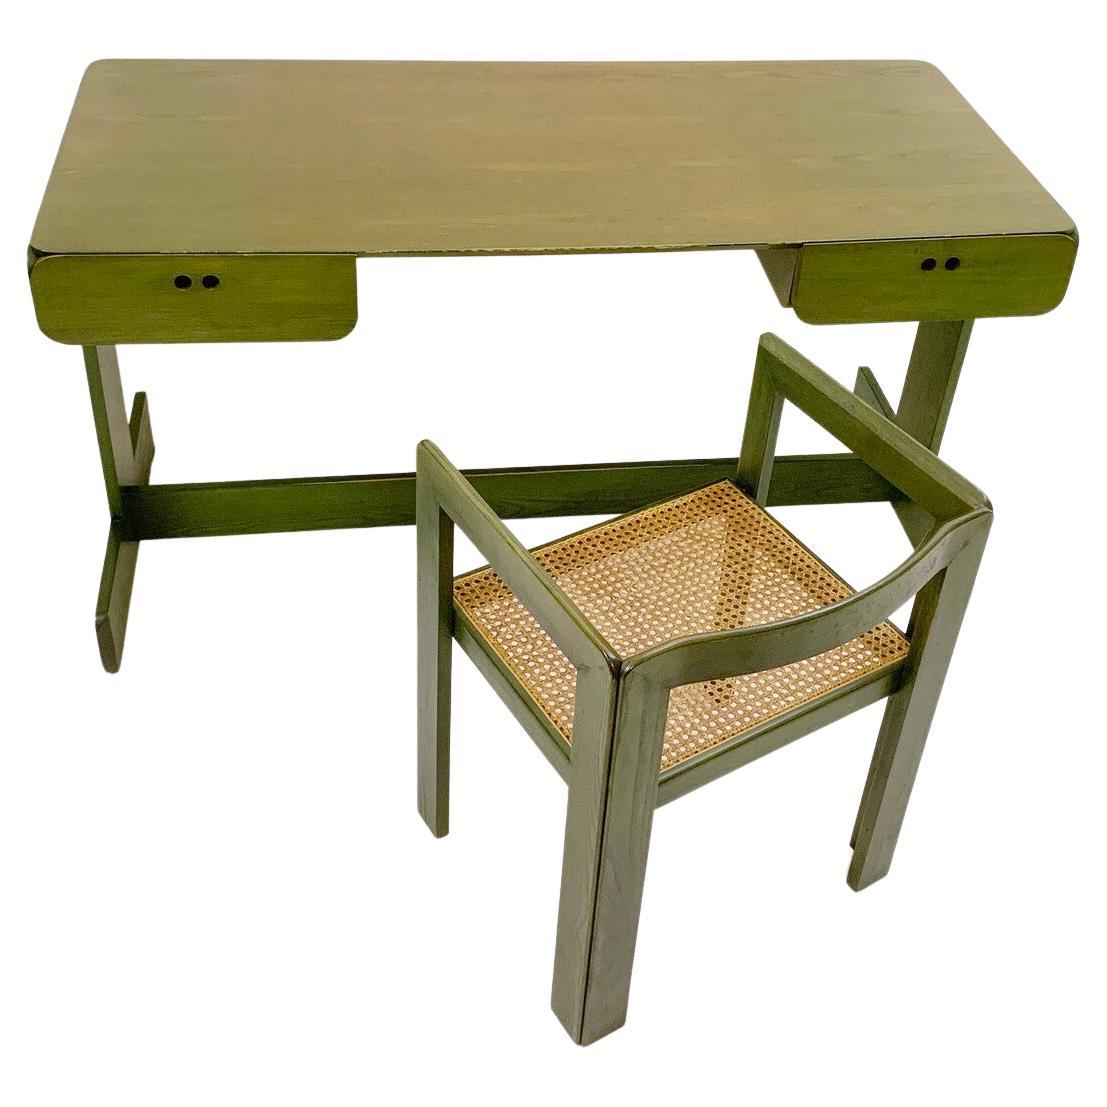 Mid-century green wooden desk by Derk Jan de Vries - The Netherlands 1960s
With desk chair.